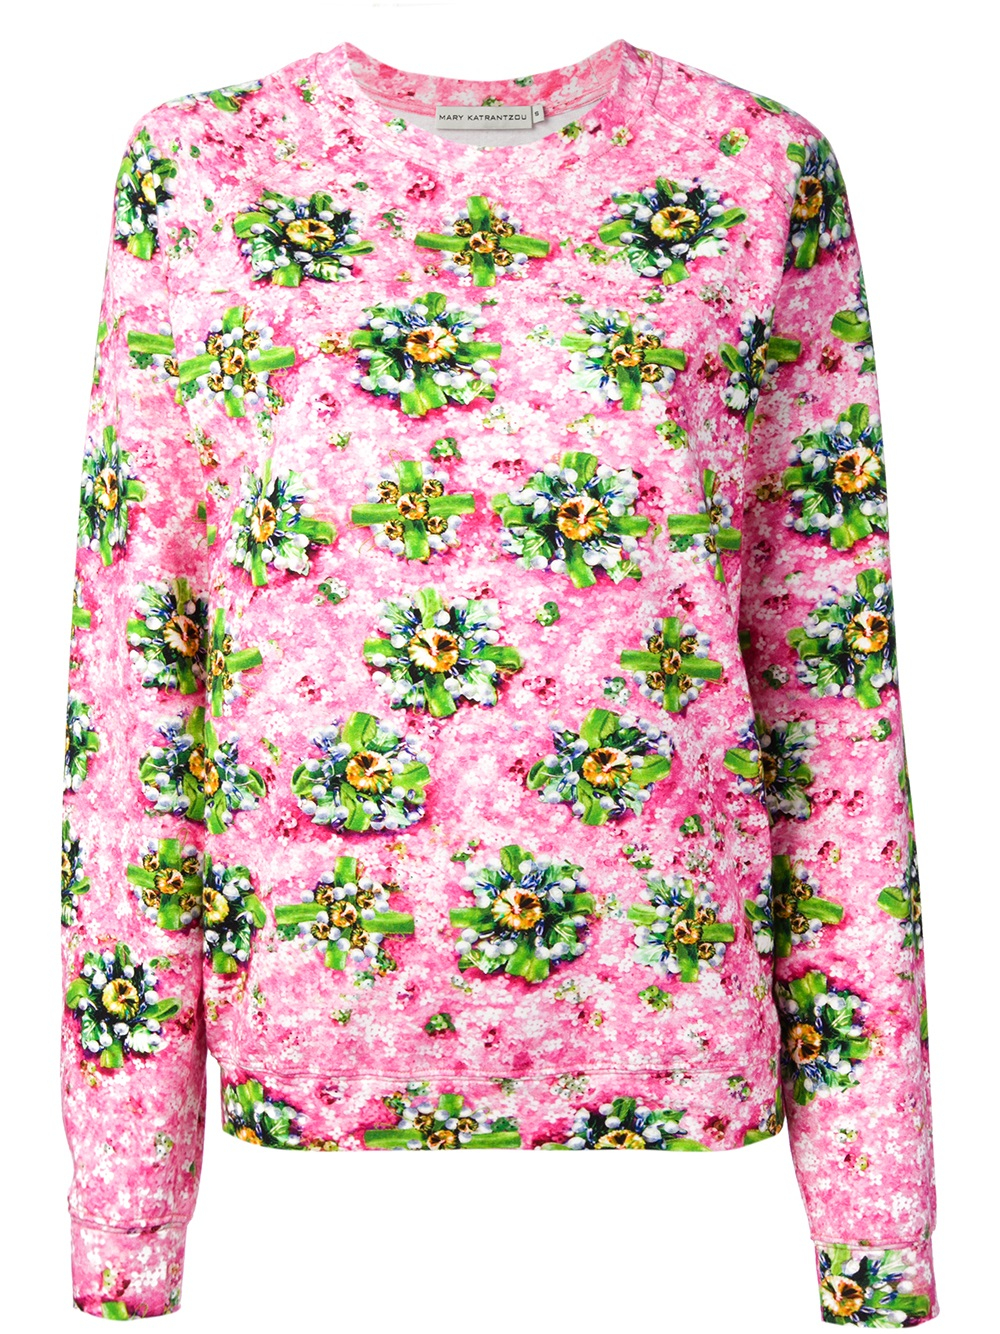 Lyst - Mary Katrantzou Flower Print Sweater in Green